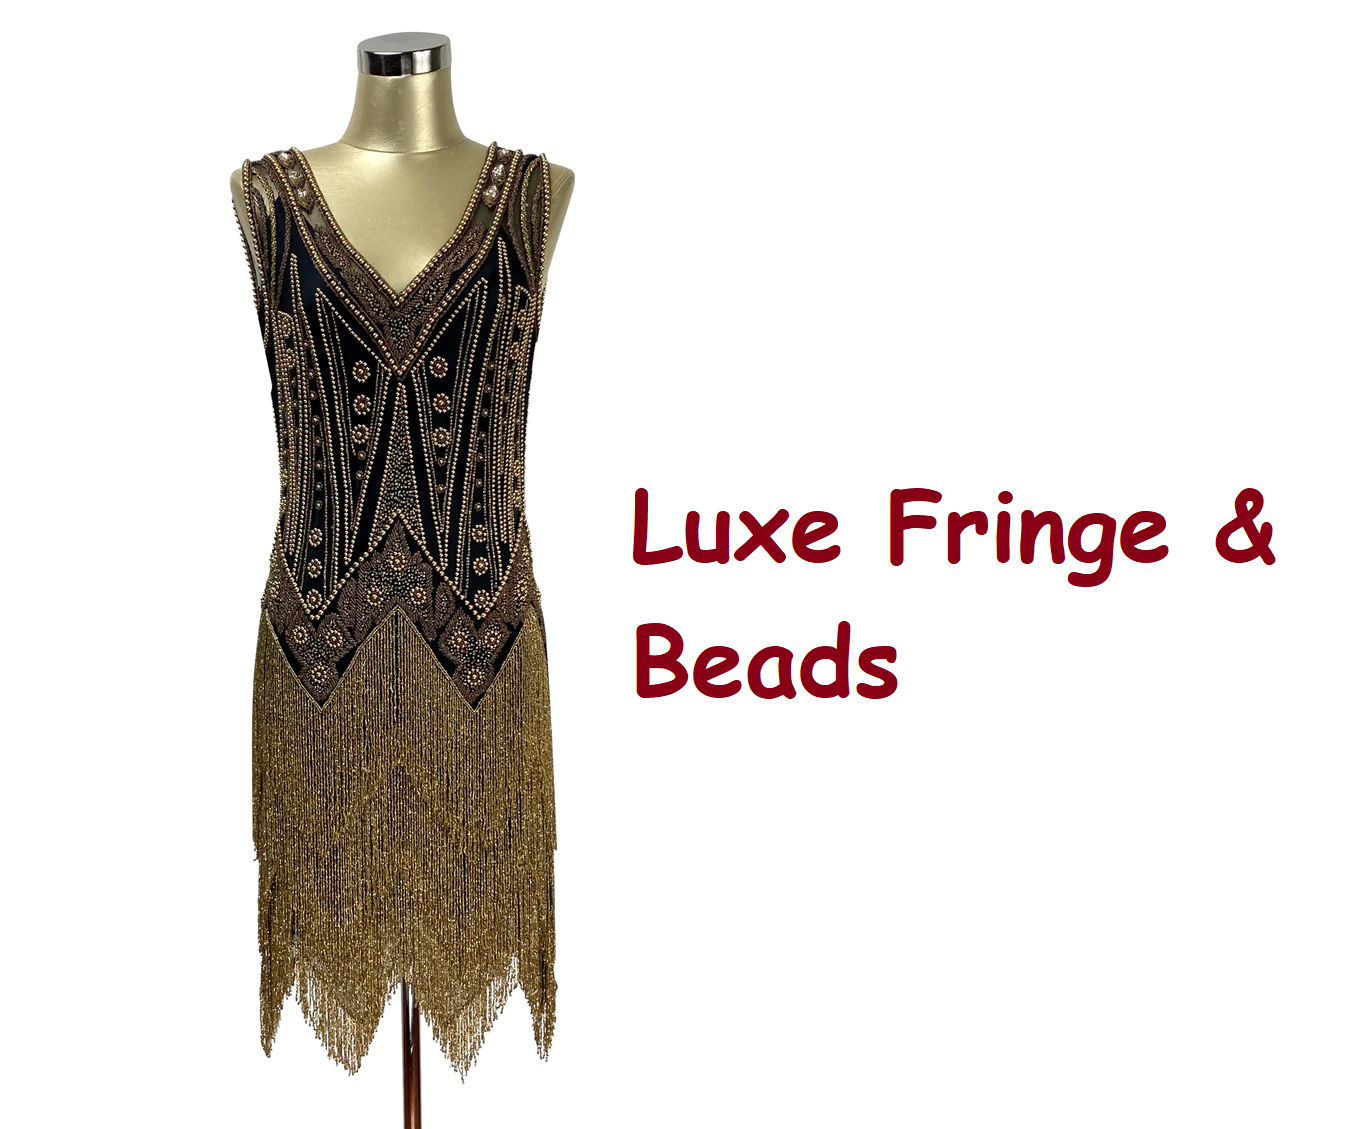 Luxe Fringe & Beads